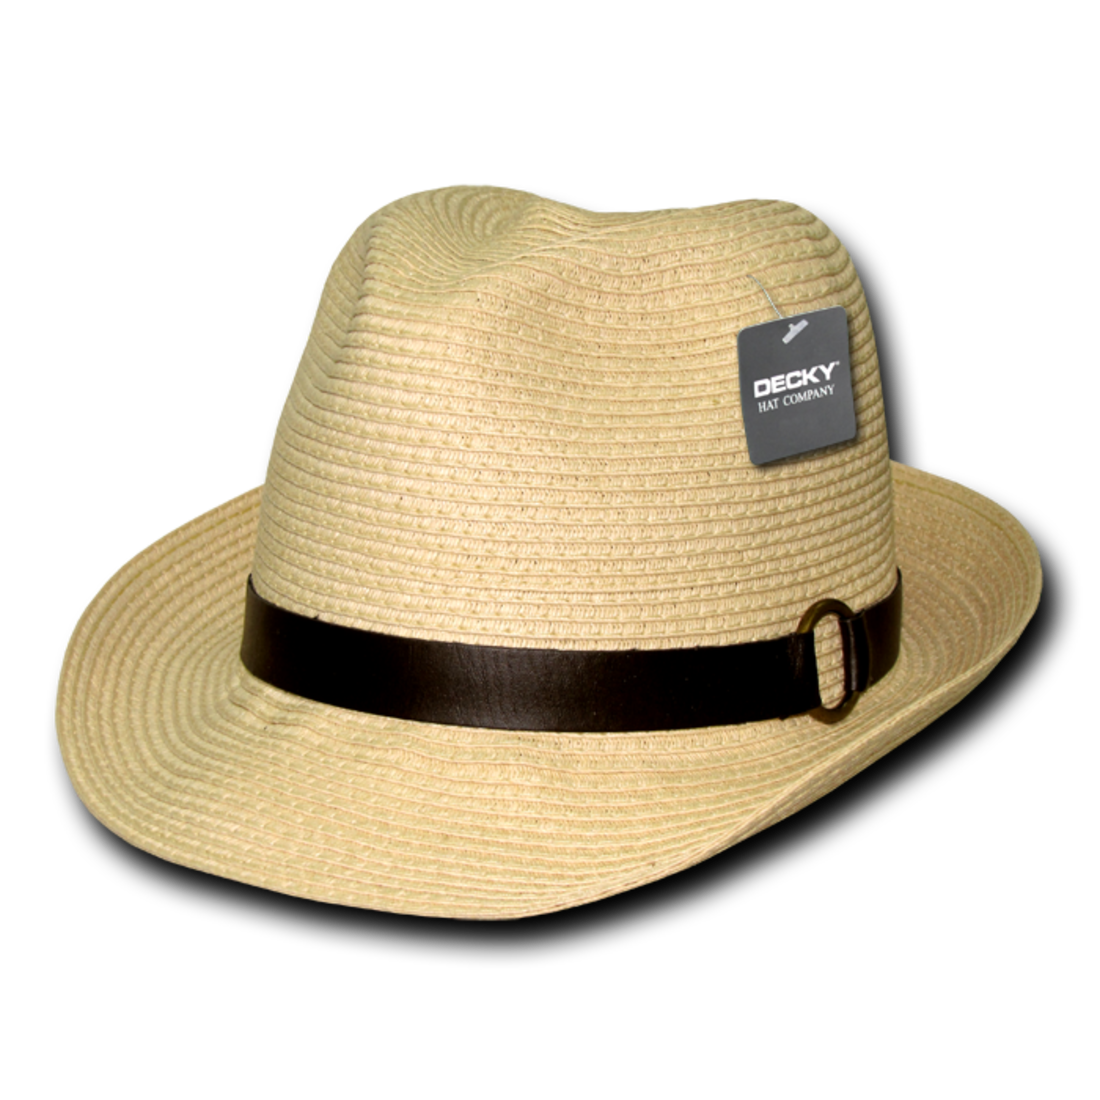 Decky 536 Natural Paper Braid Woven Fedora Hats Panama Caps Hatband Summer Wholesale